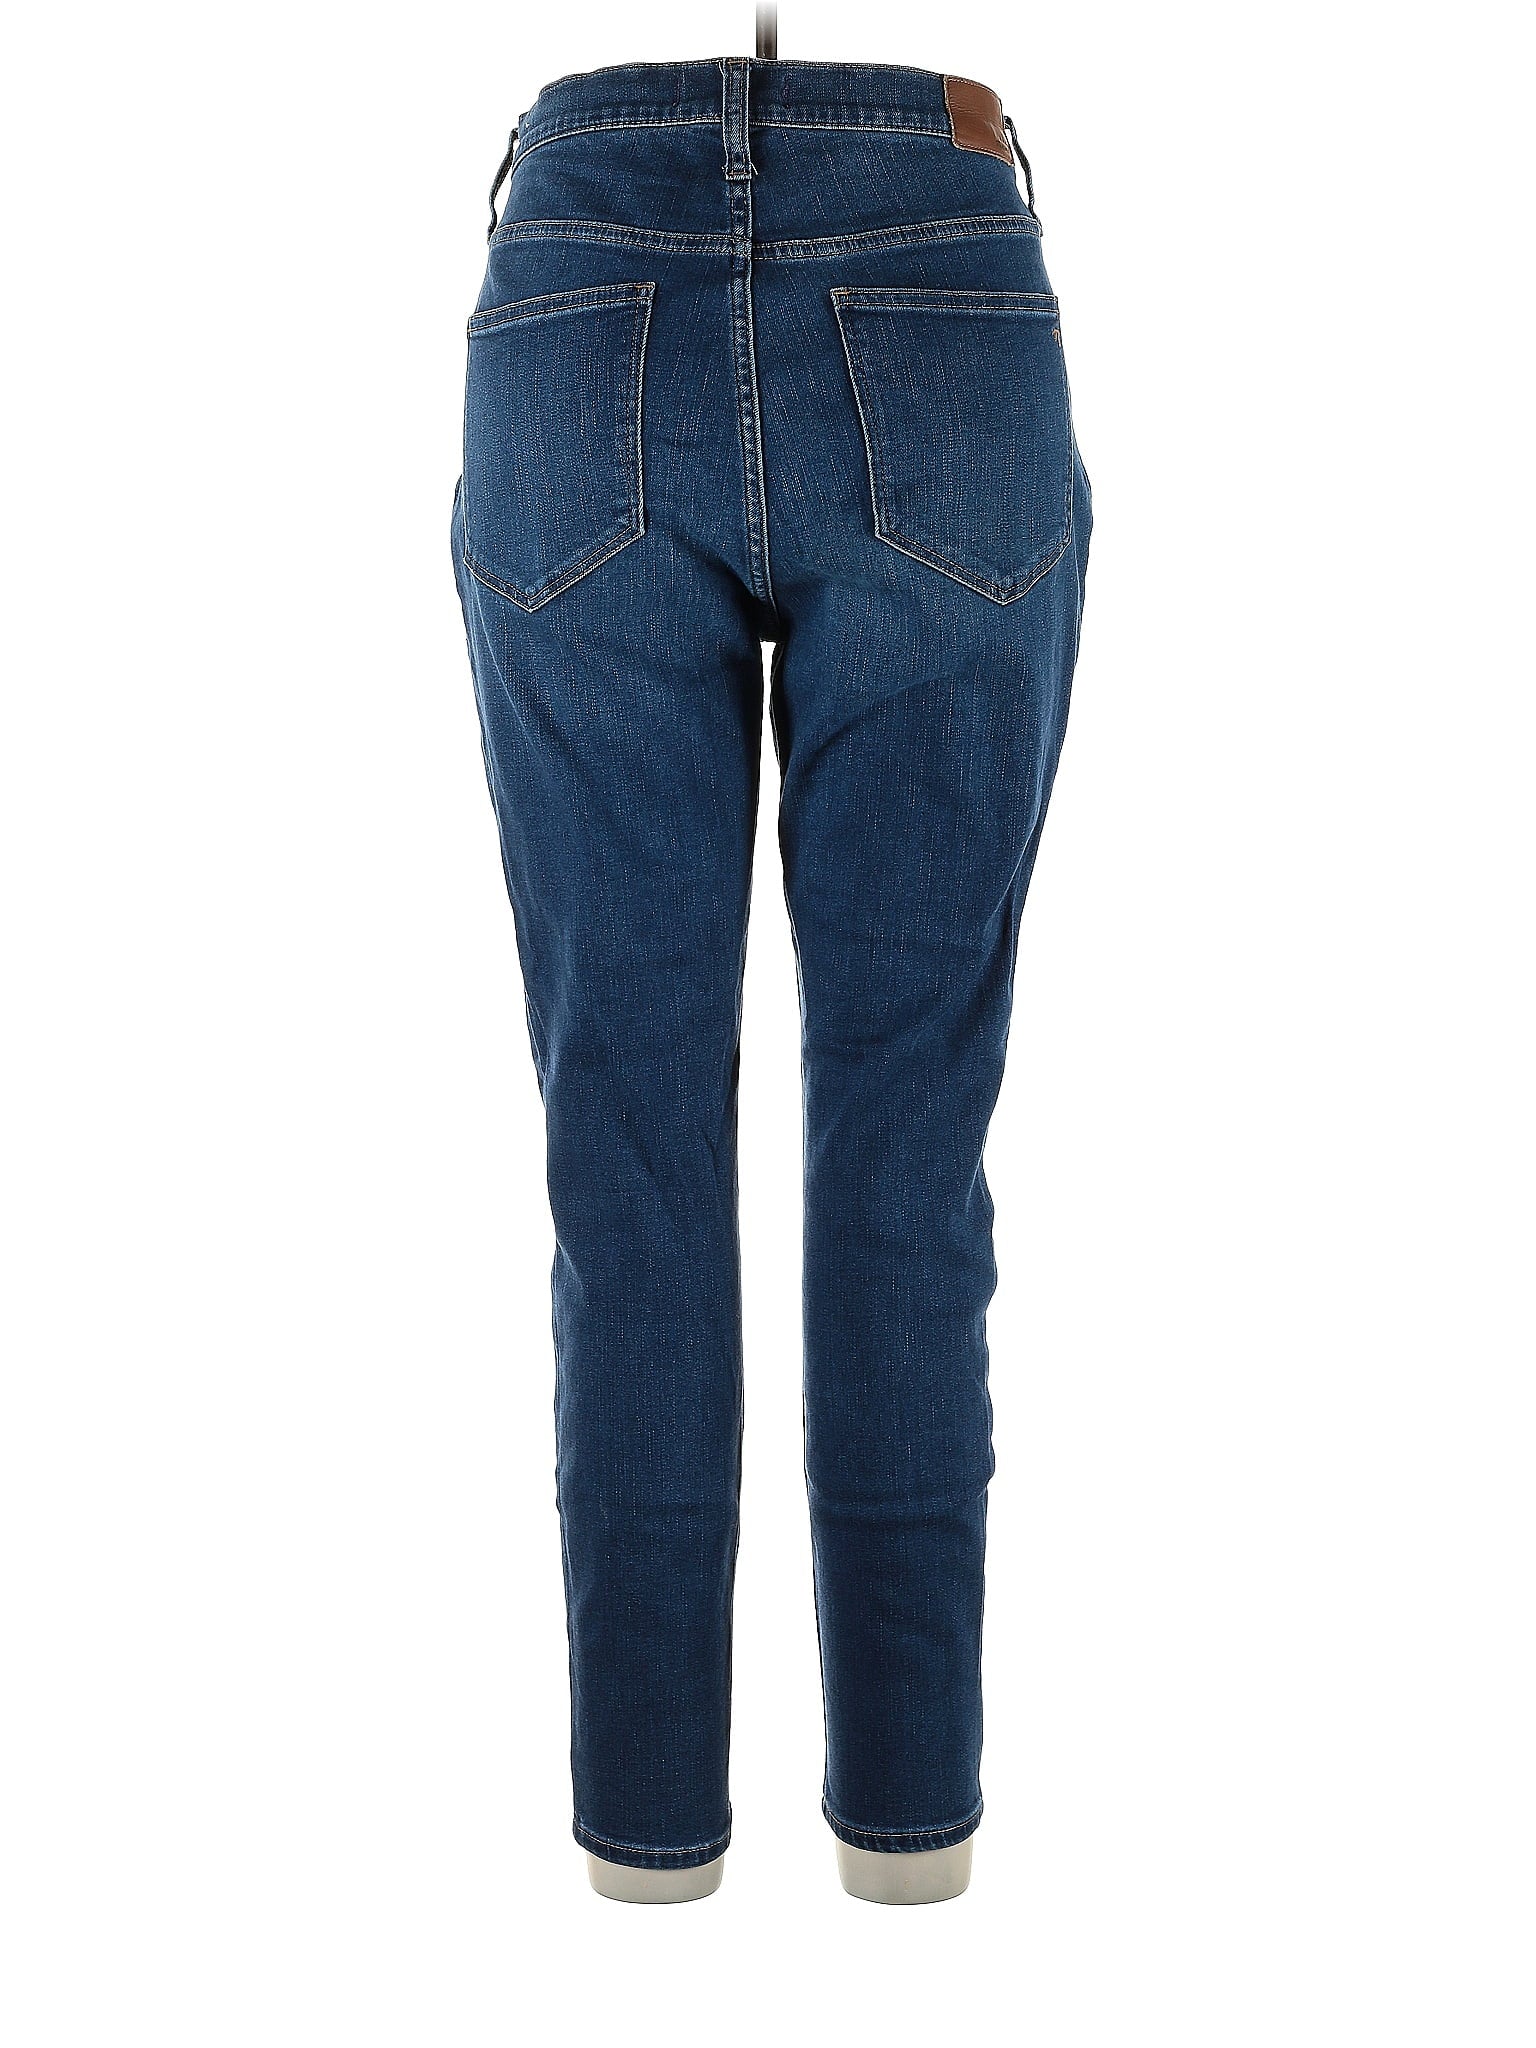 High-Rise Boyjeans Jeans in Dark Wash waist size - 32